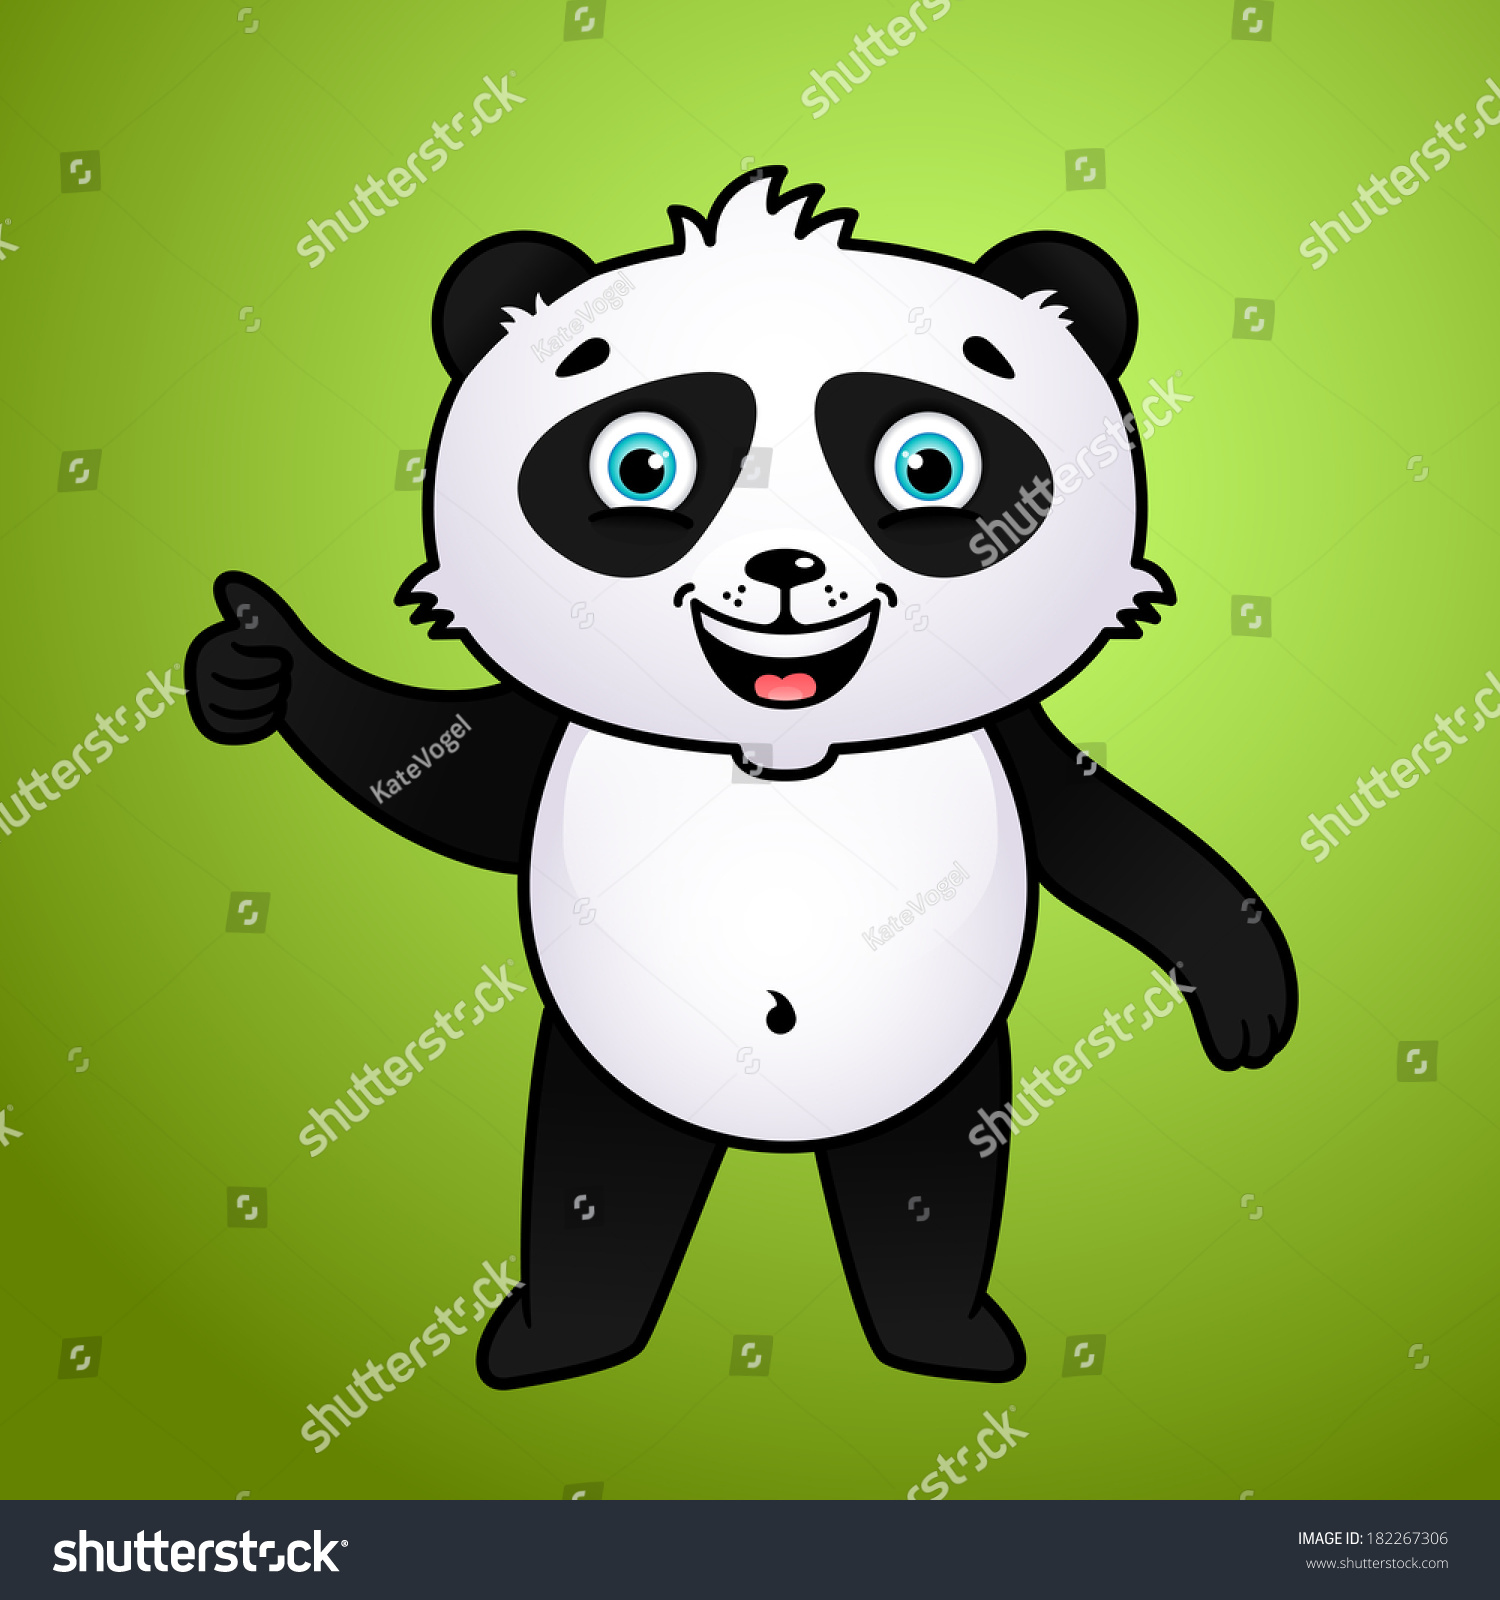 Cute Cartoon Panda On Green Background Stock Vector 182267306 ...